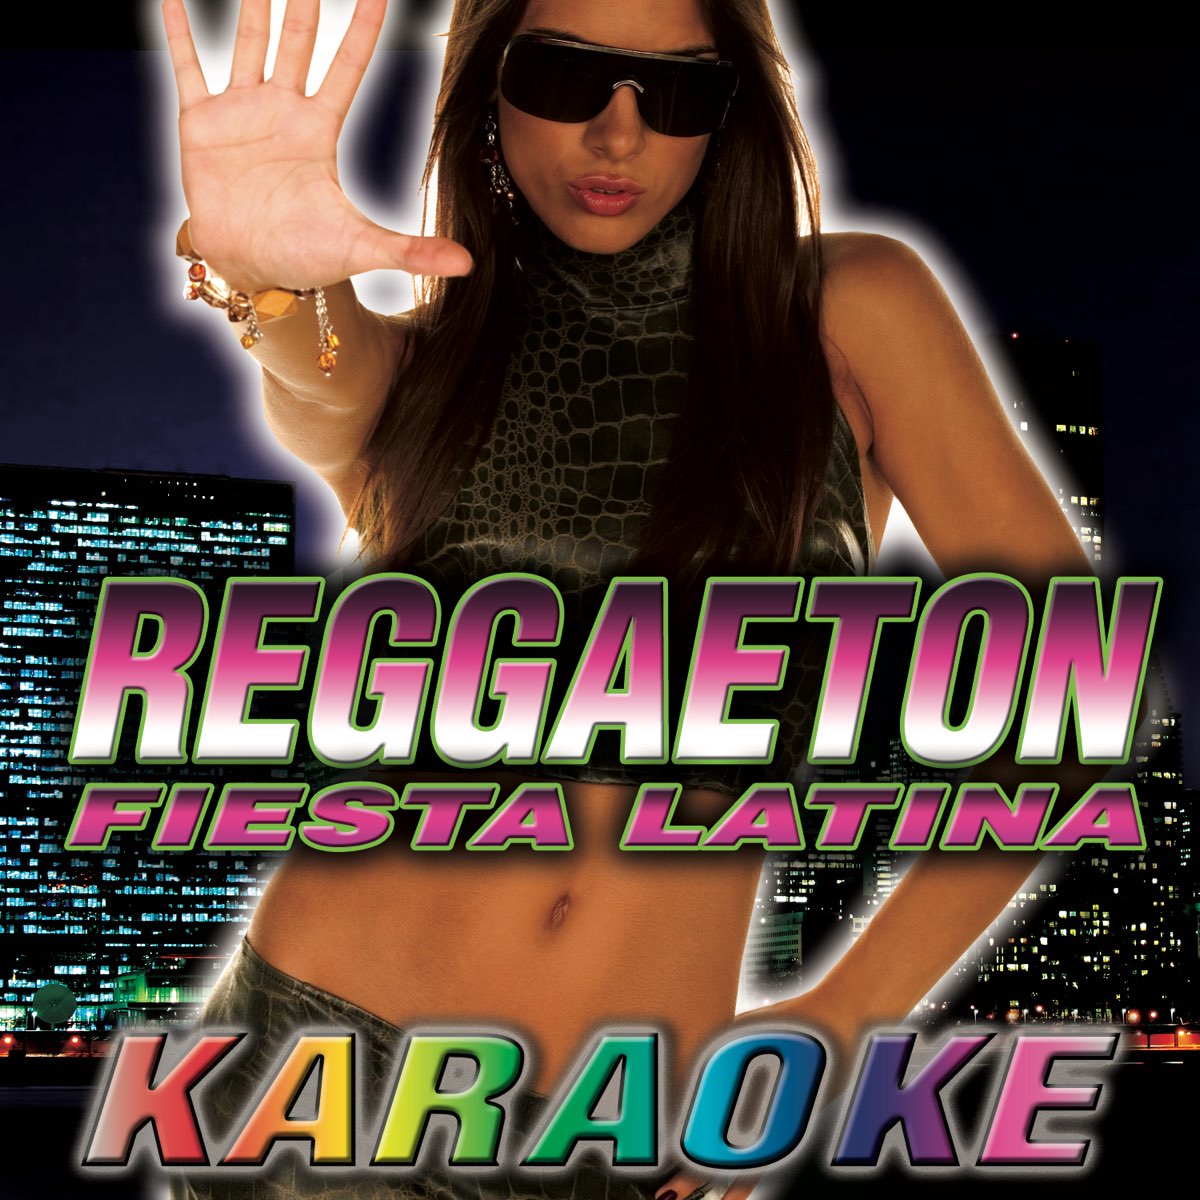 Reggaeton. Reggaeton обложка альбома. Reggaeton girl обложка альбома. Reggaeton champagne speed